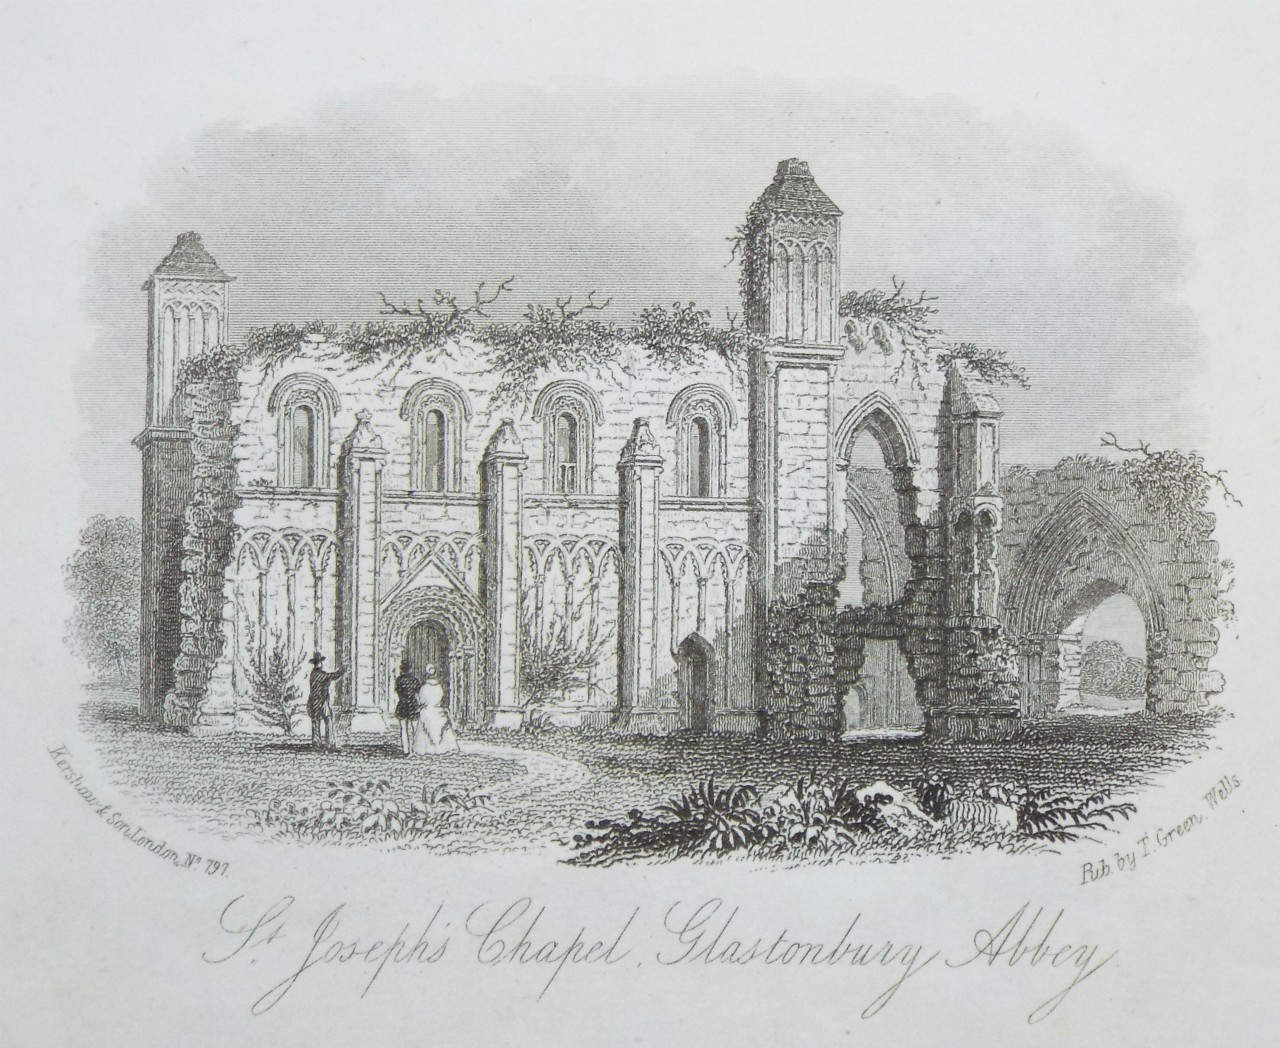 Steel Vignette - St. Joseph's Chapel, Glastonbury, Abbey. - Kershaw